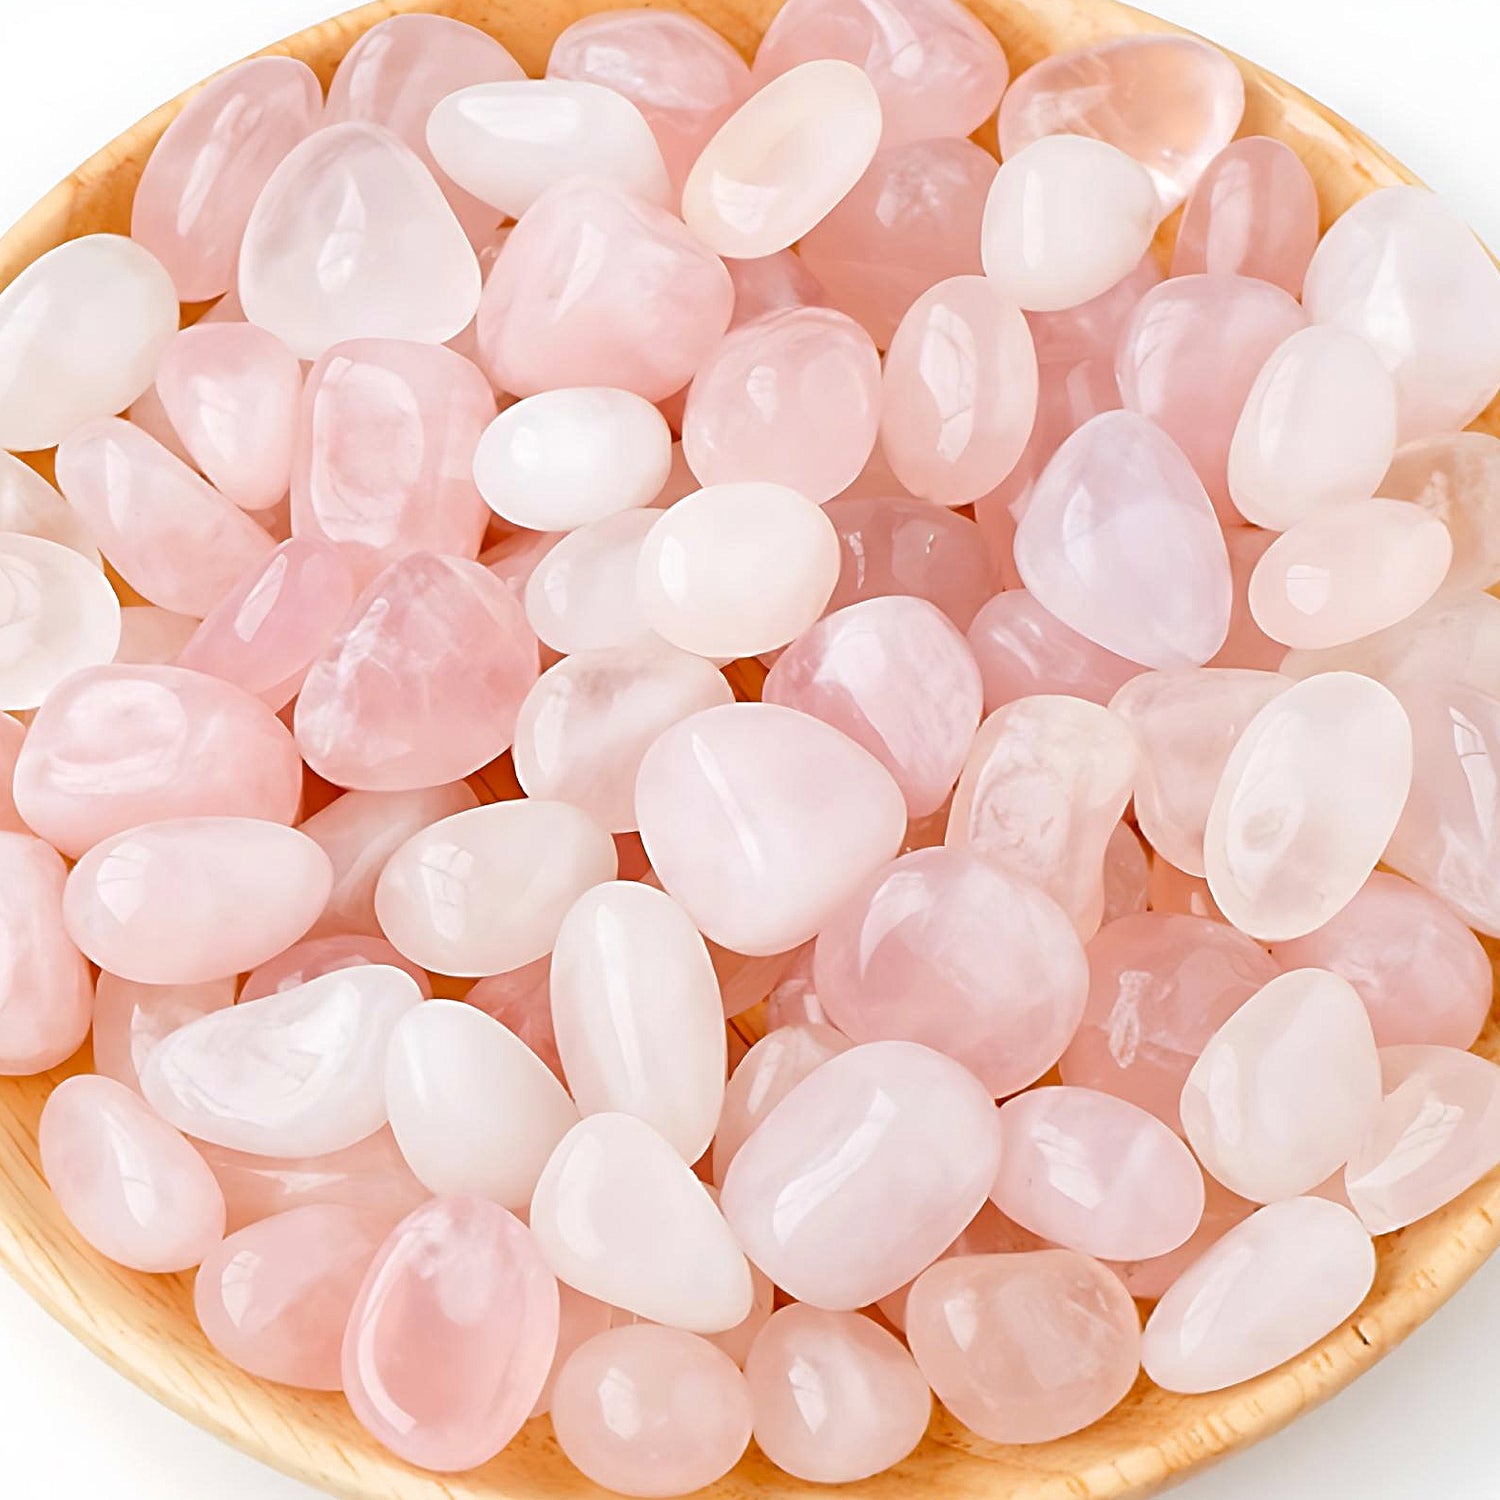 semi-precious tumbled stones in a bamboo bowl: pink quartz